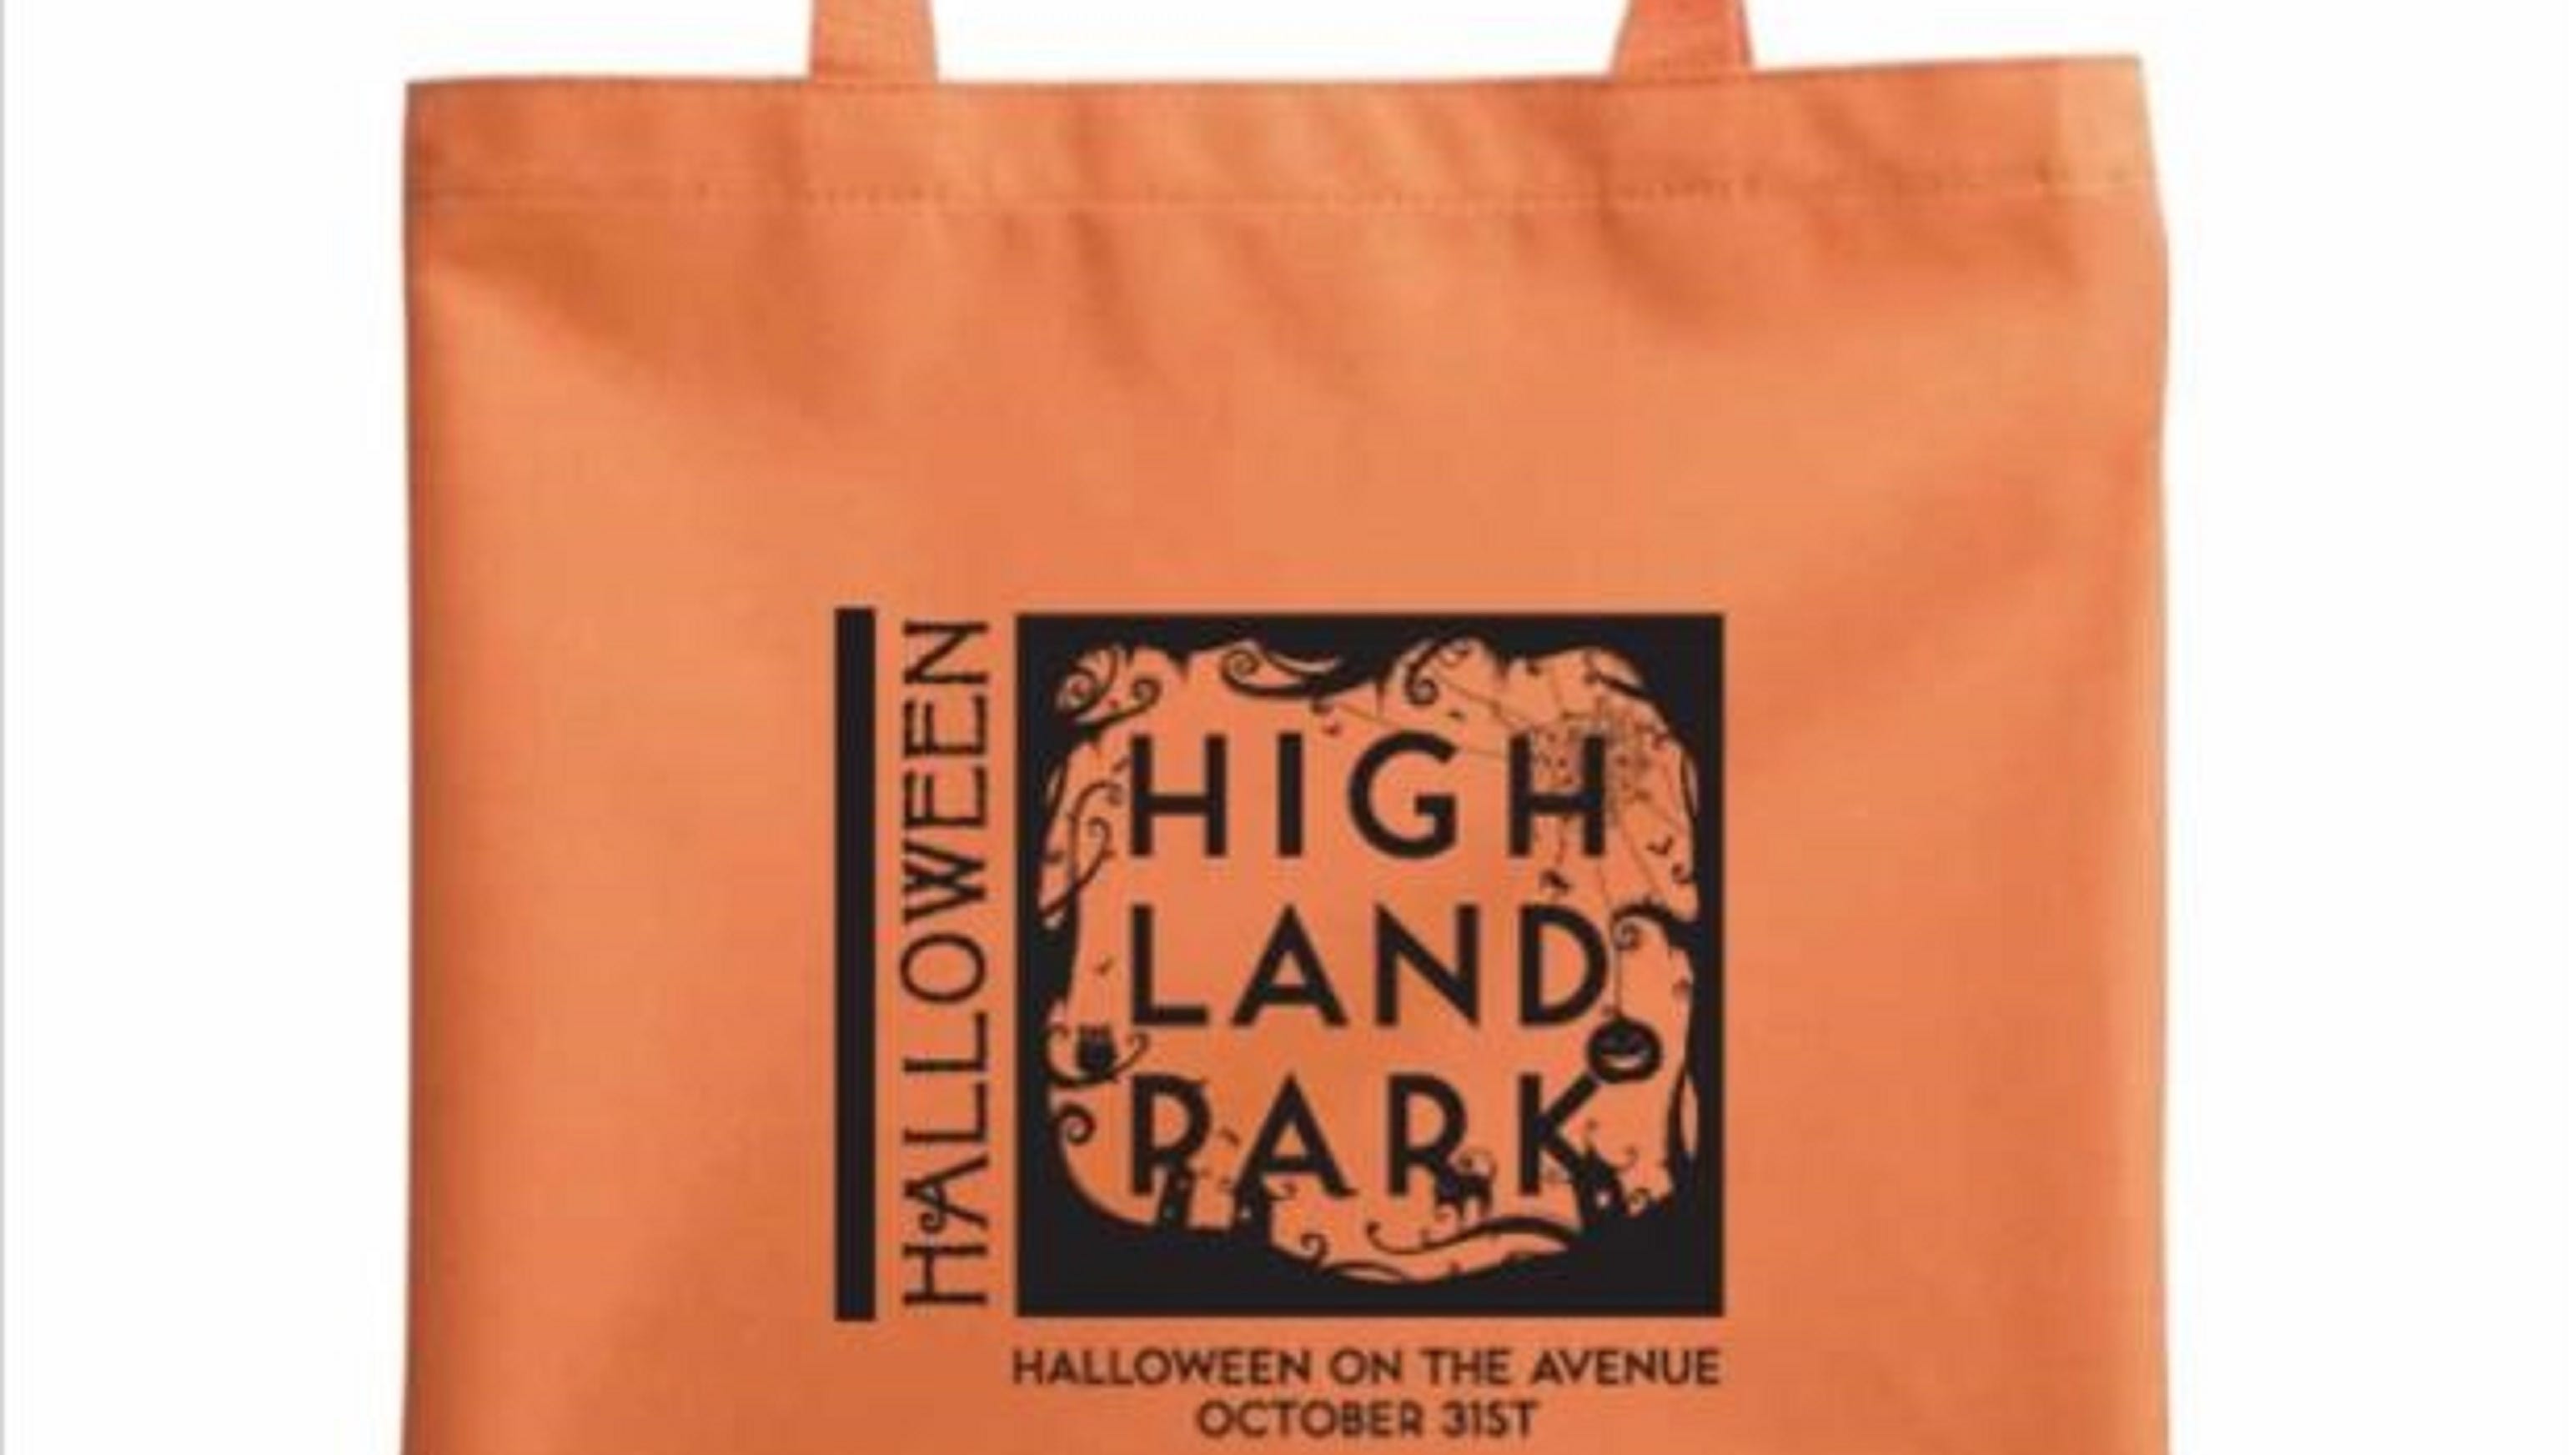 Highland Park seeks Halloween sponsors